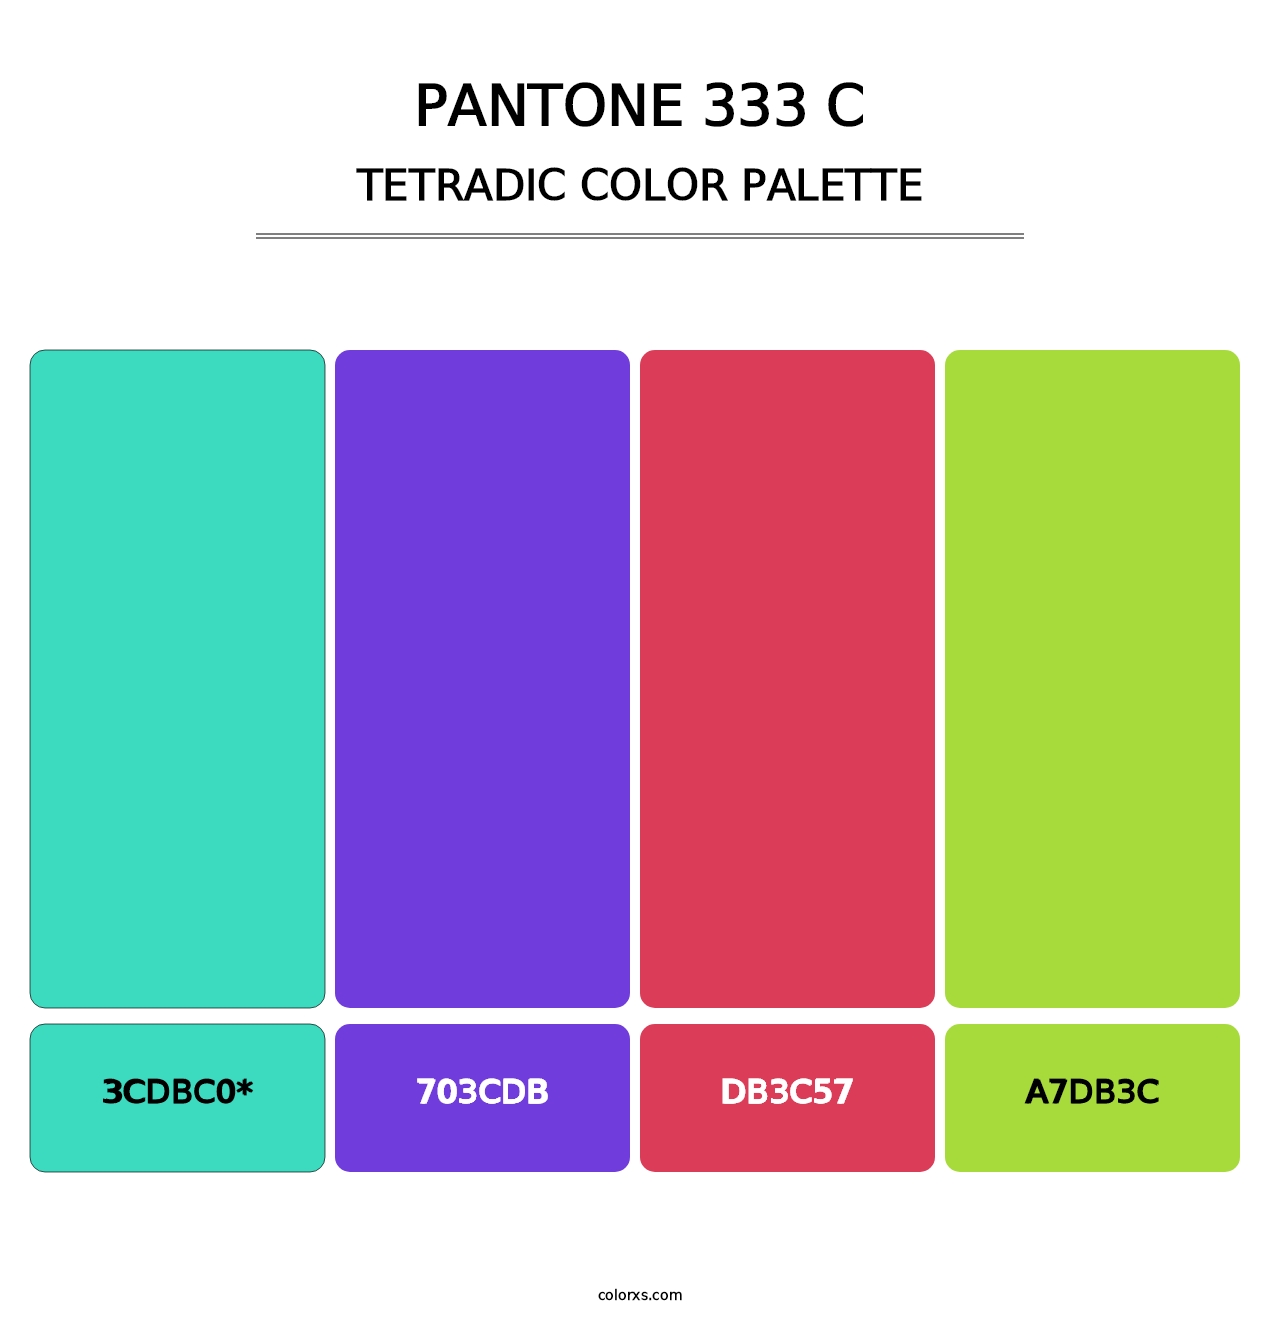 PANTONE 333 C - Tetradic Color Palette